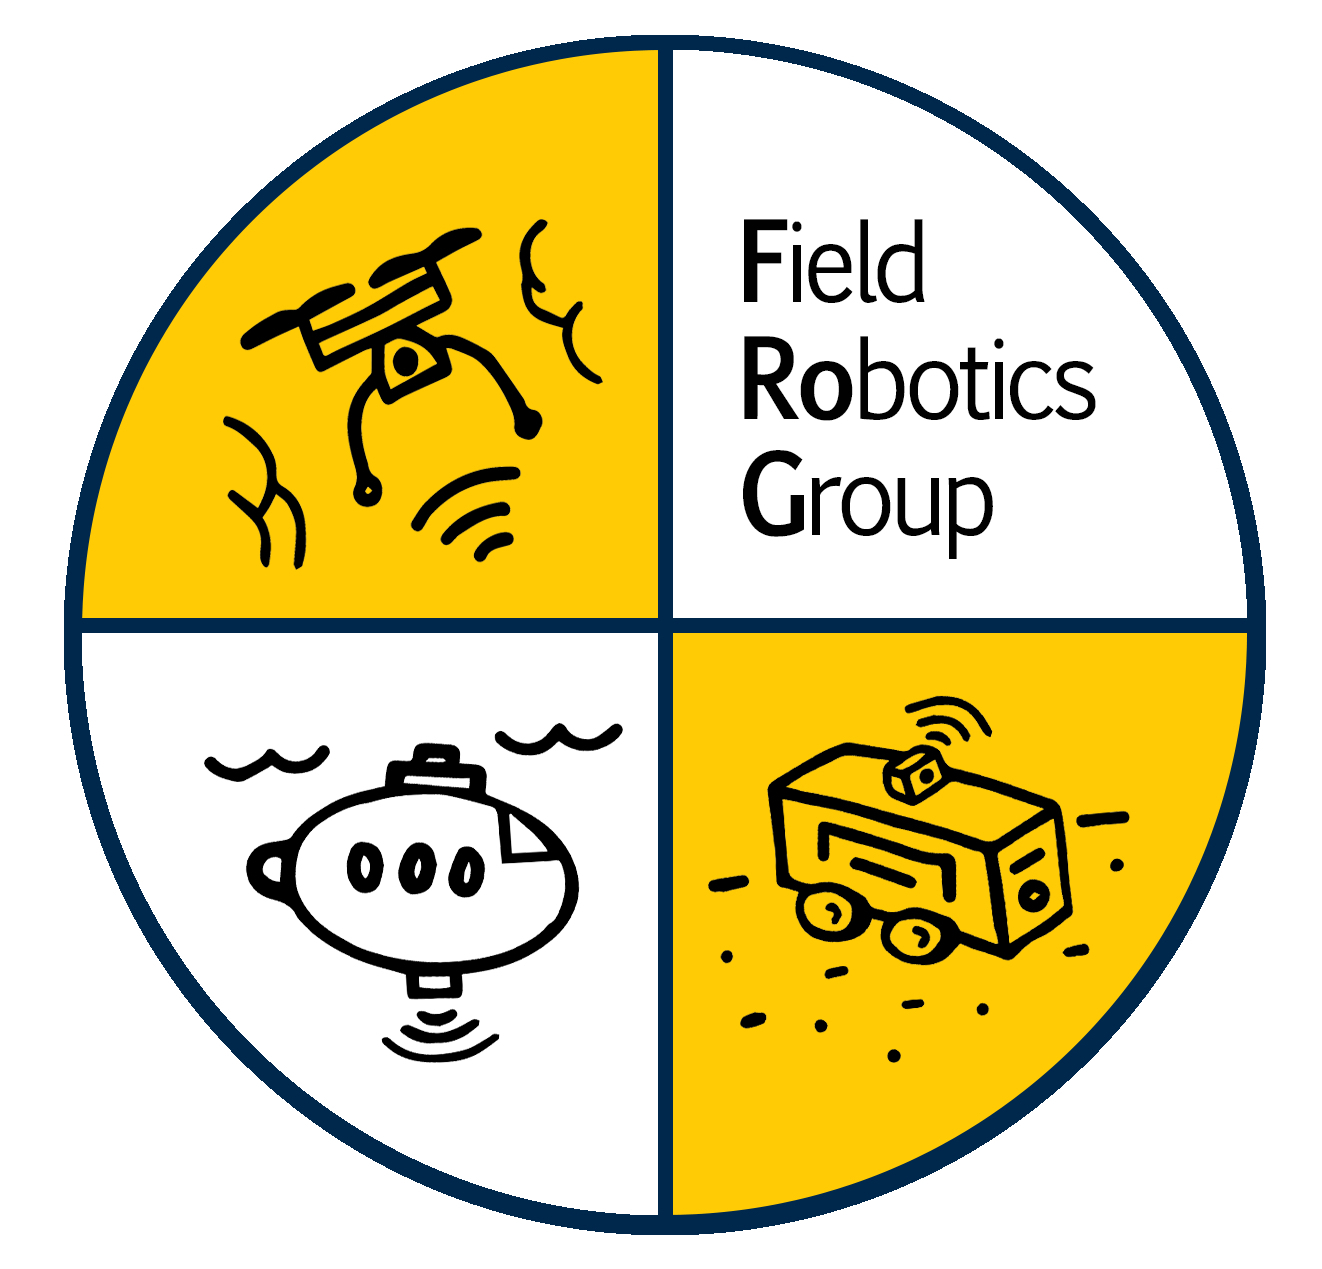 Field Robotics Group